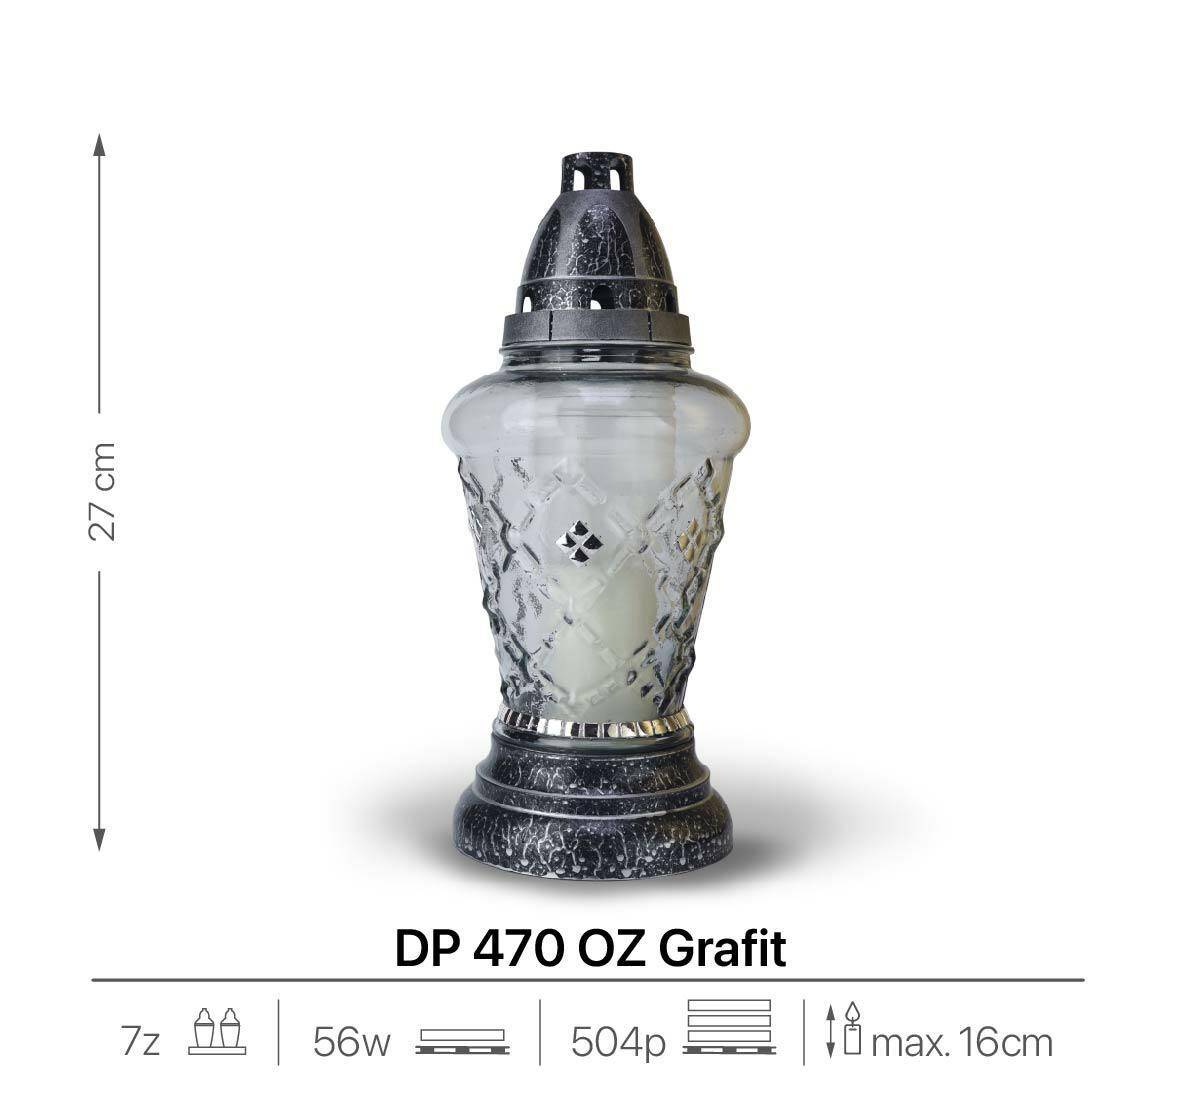 DP 470 OZ Grafit (znicz)